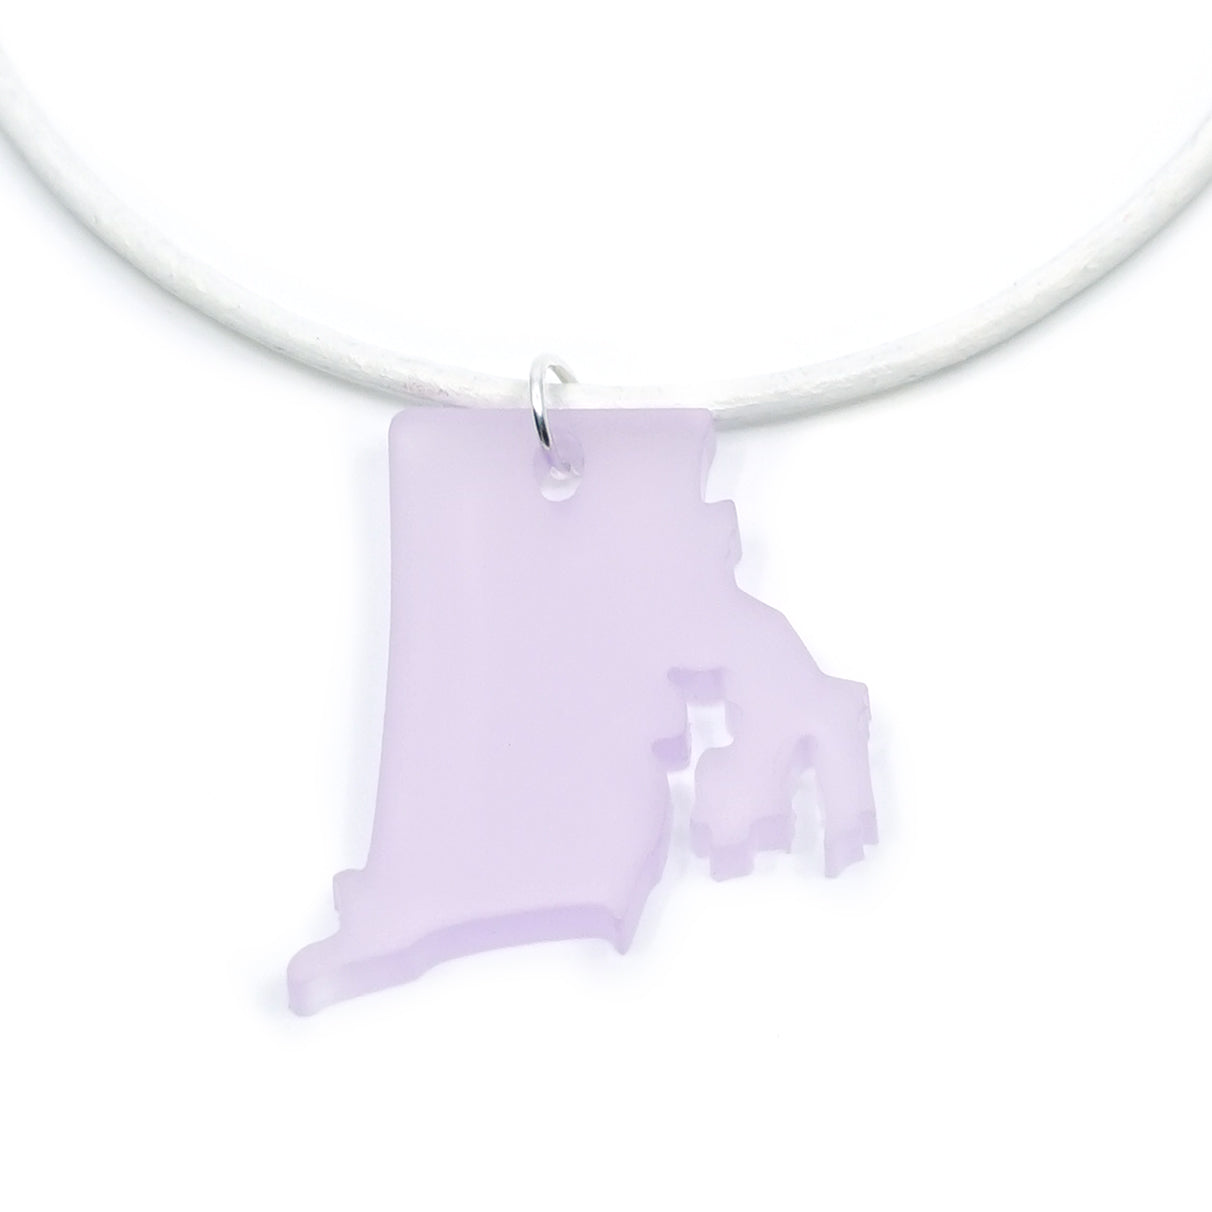 Rhode Island Necklace